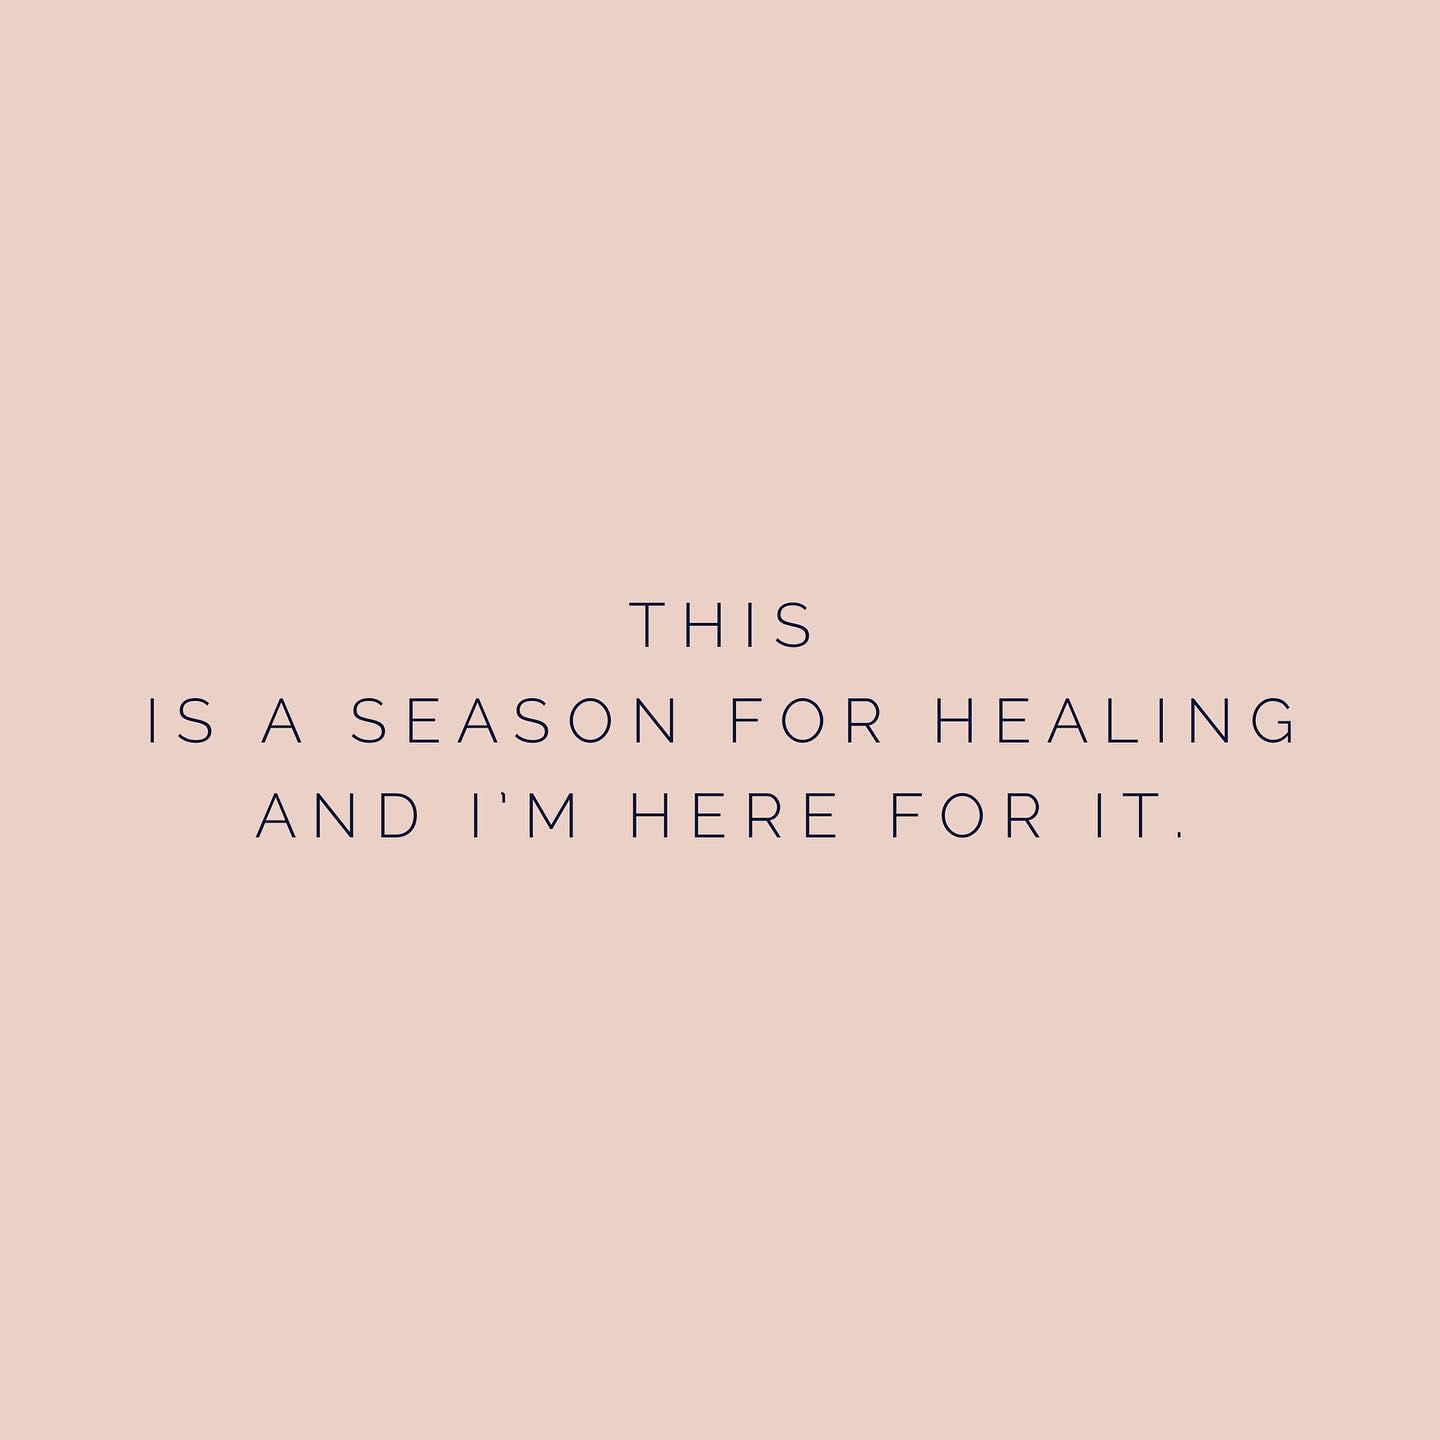 Jada Pinkett Smith's statement about healing